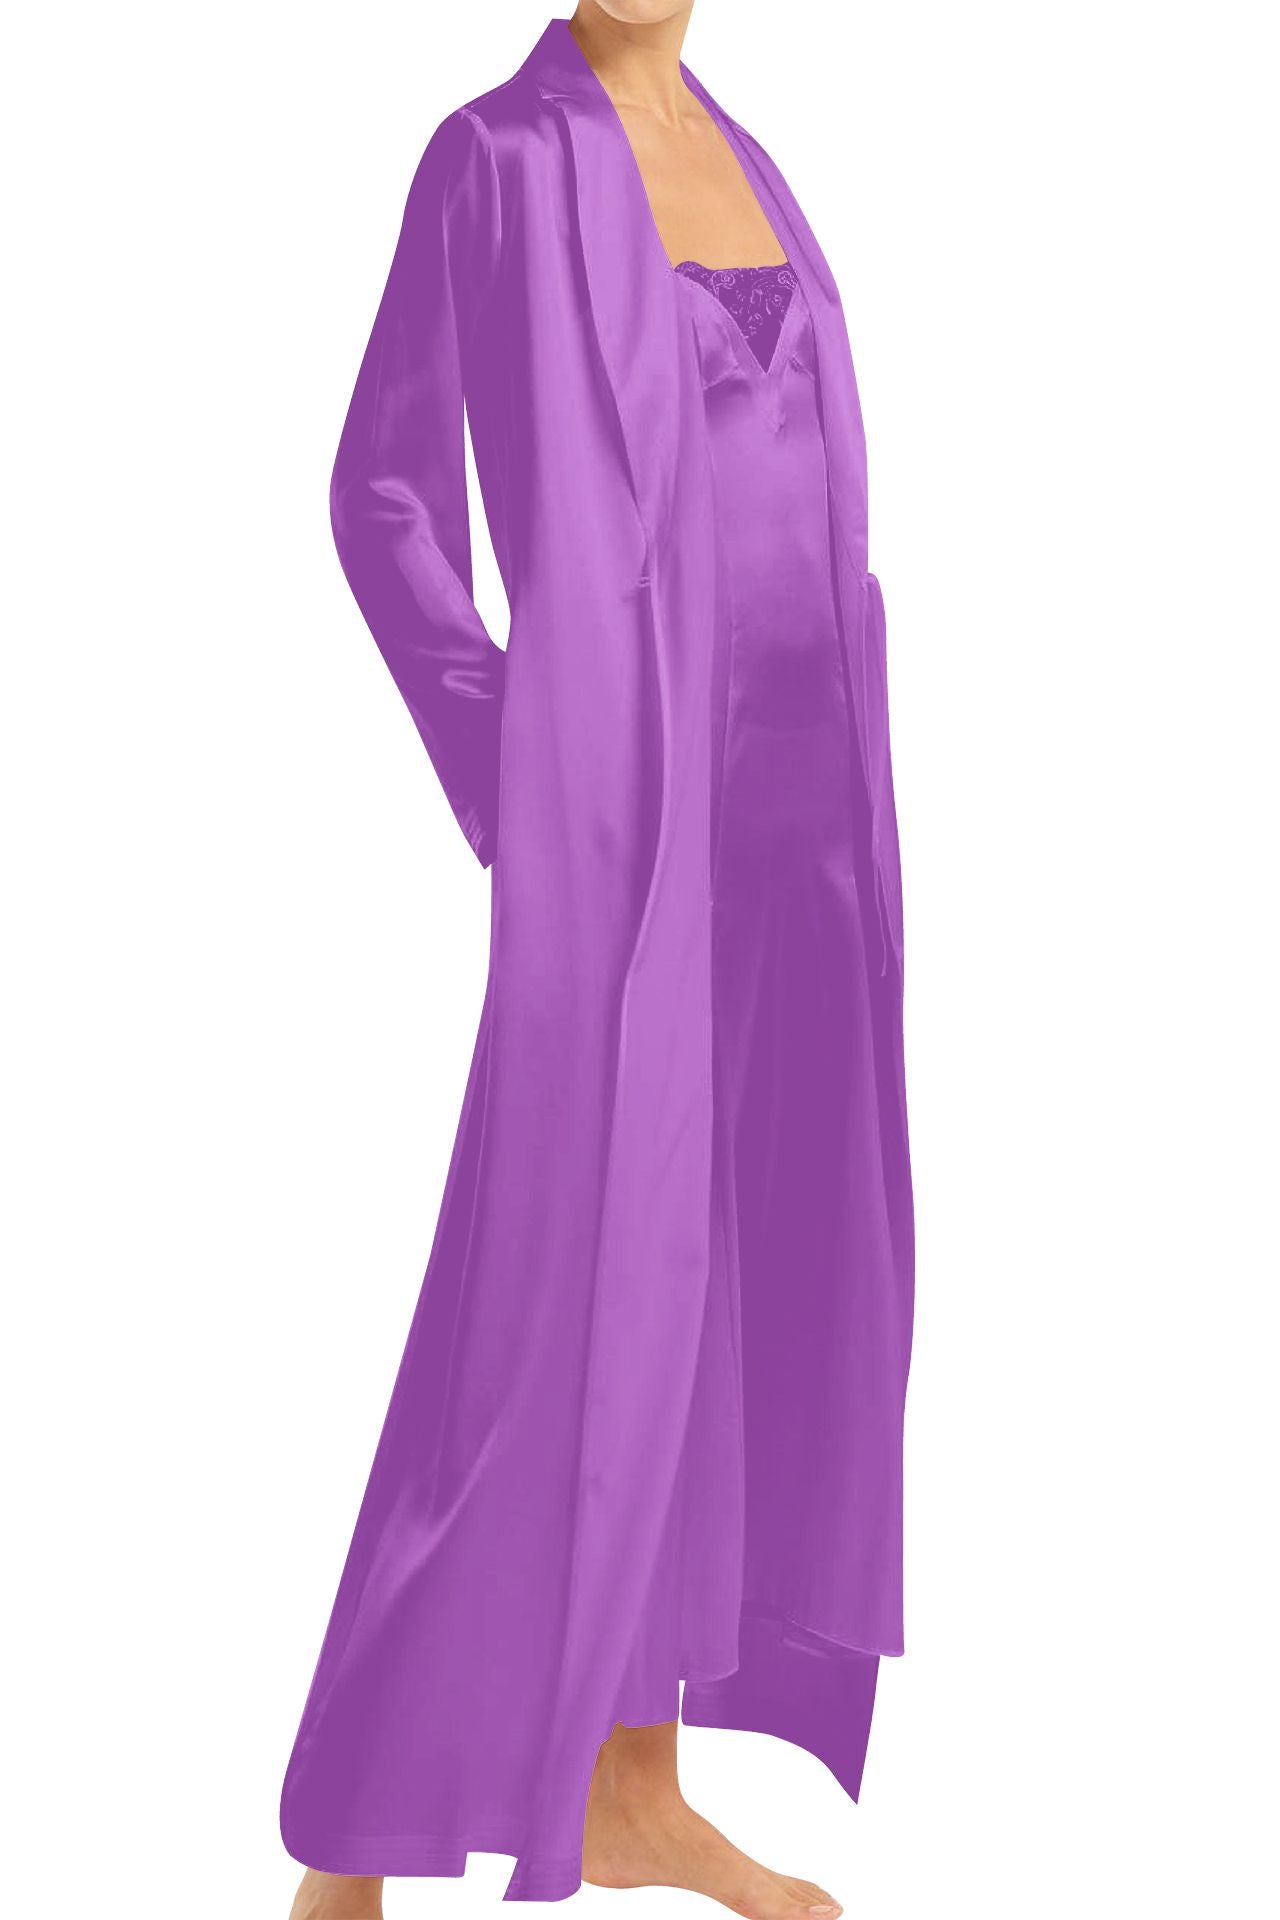 "Kyle X Shahida" "purple silk wrap dress" "long sleeve wrap dress" "womens purple wrap dress"